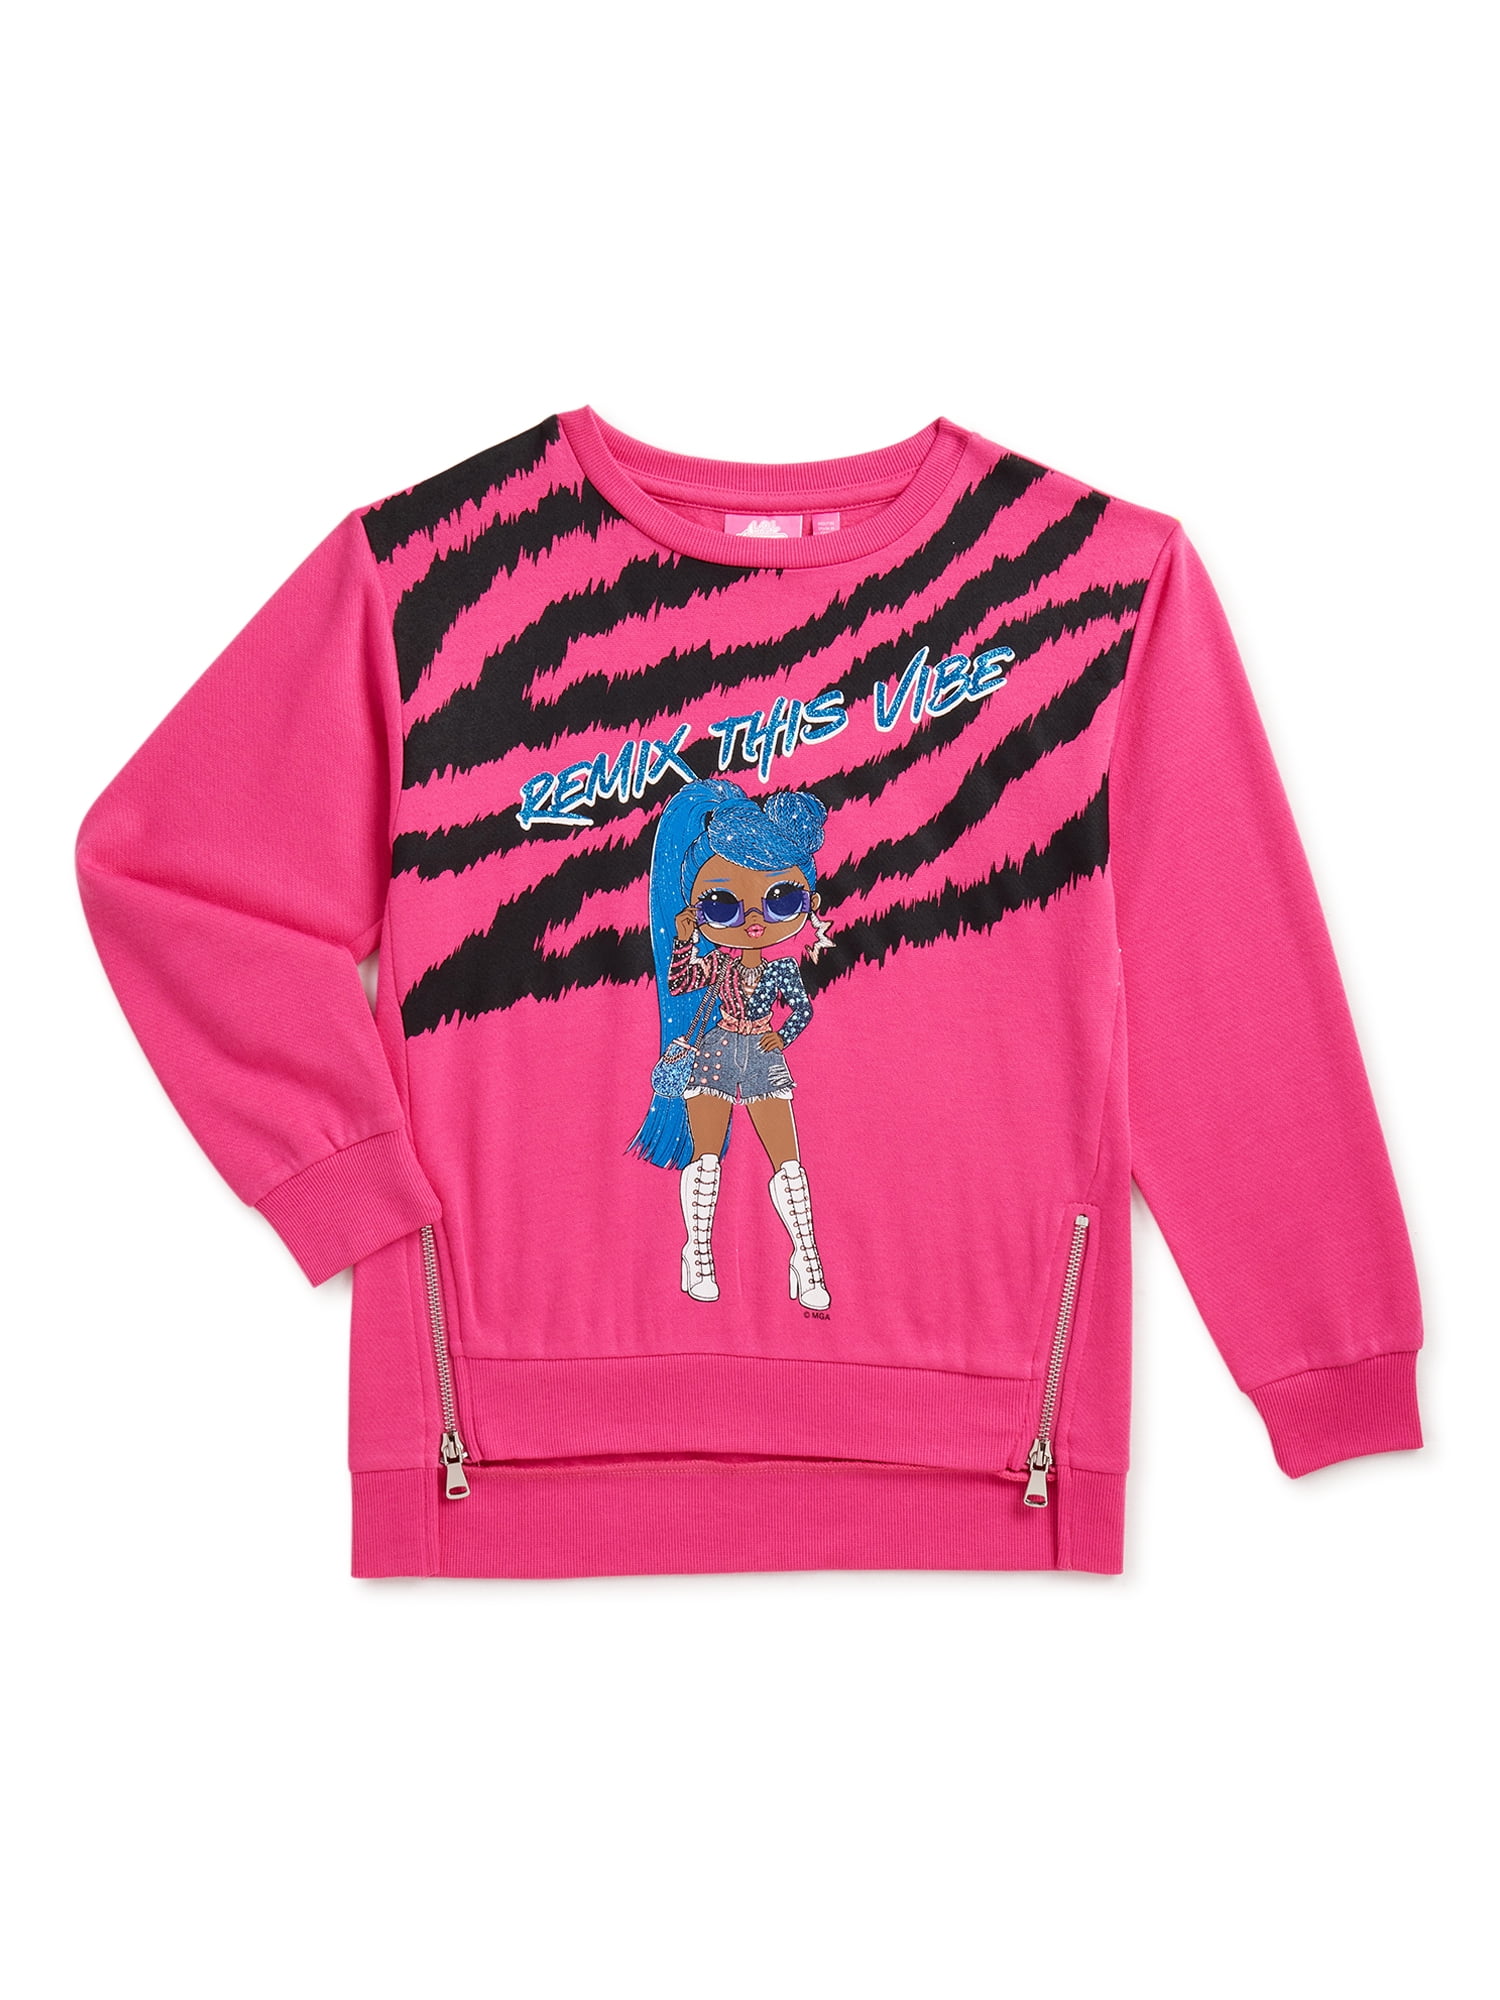 L.O.L. Surprise! Girls Fleece Crew Neck Sweatshirt Sizes 4-16 Walmart.com